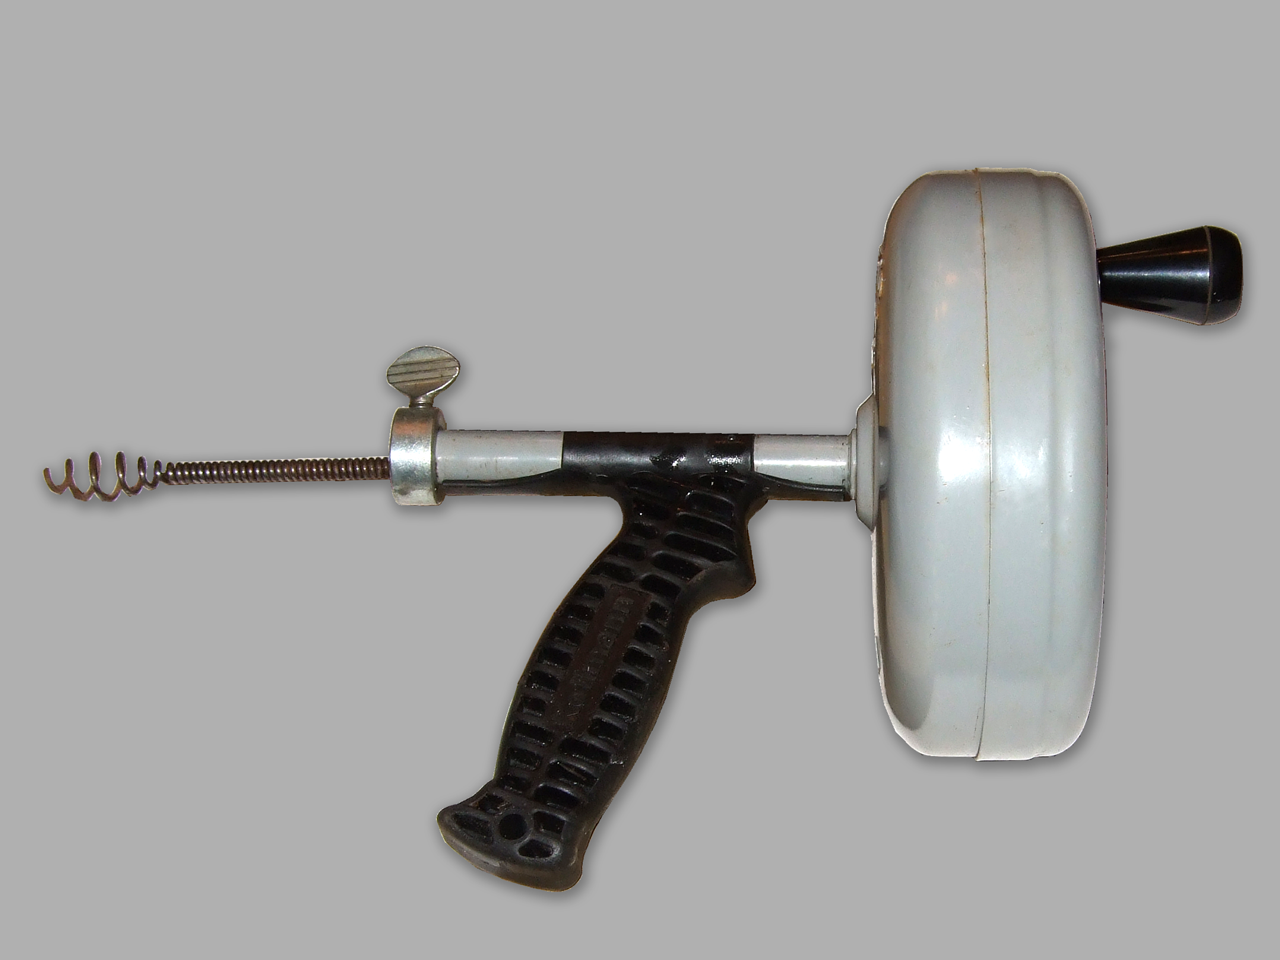 Image of plumbers handheld drain auger